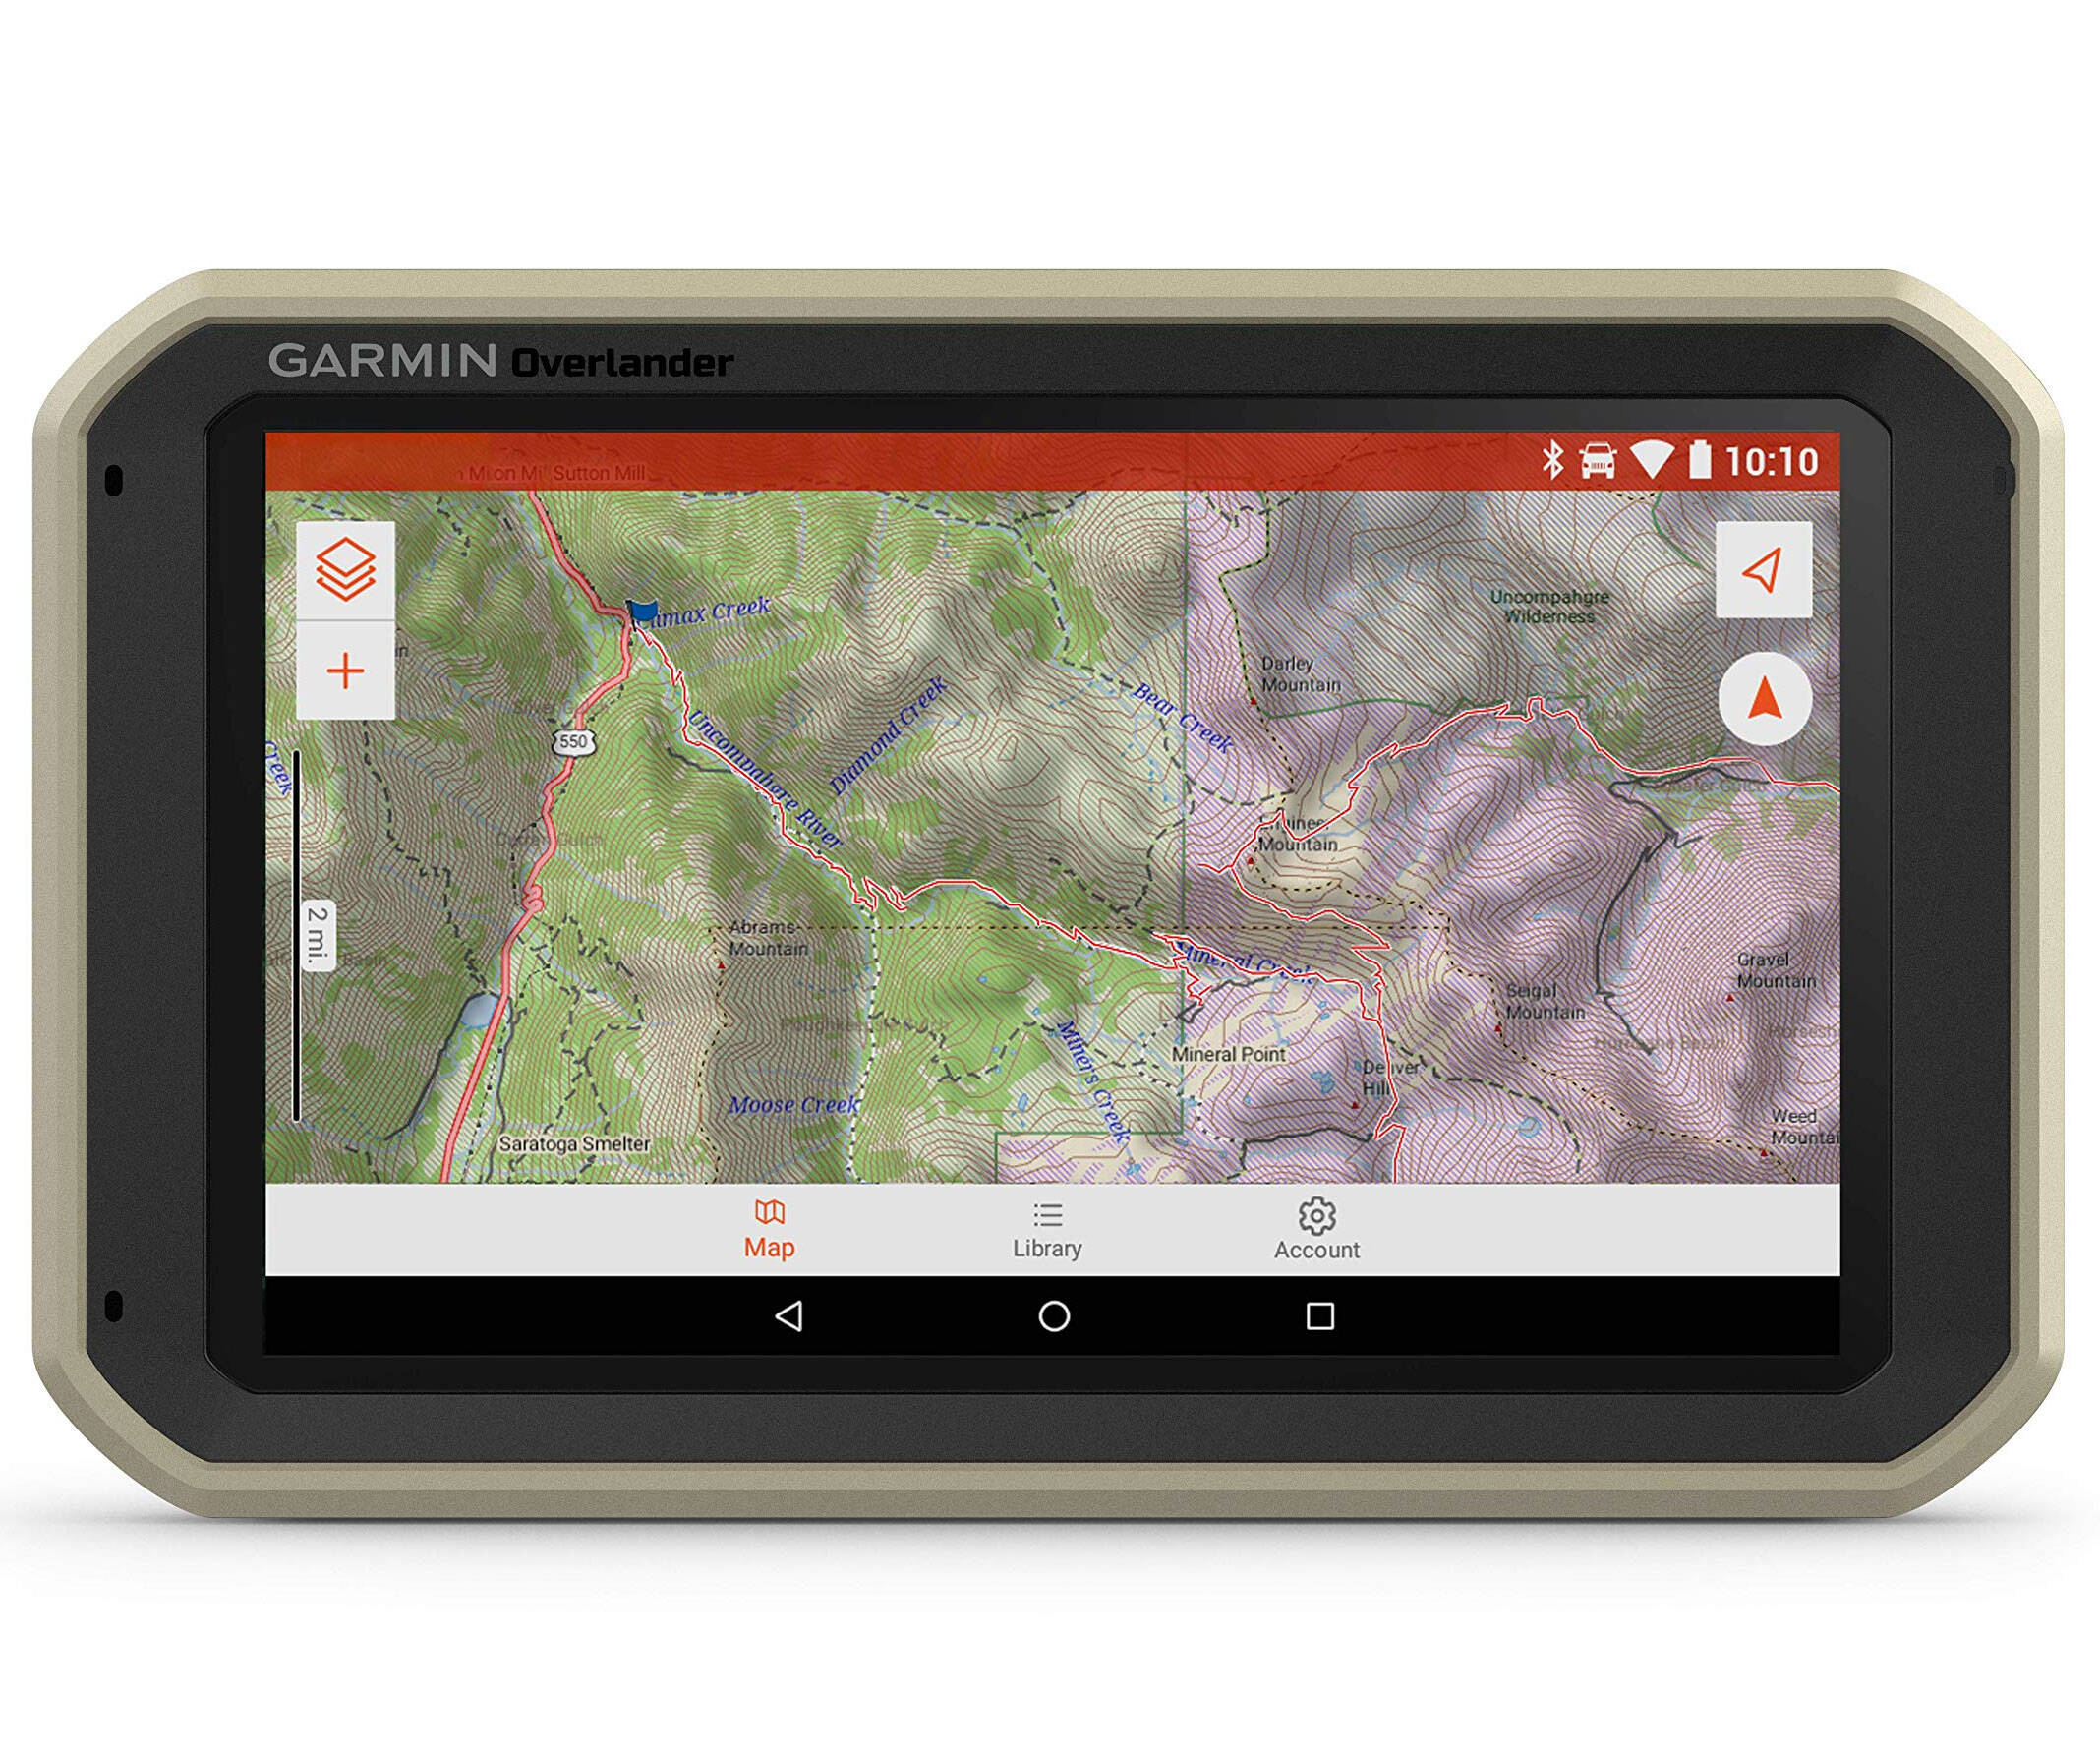 Garmin Overlander GPS - http://coolthings.us